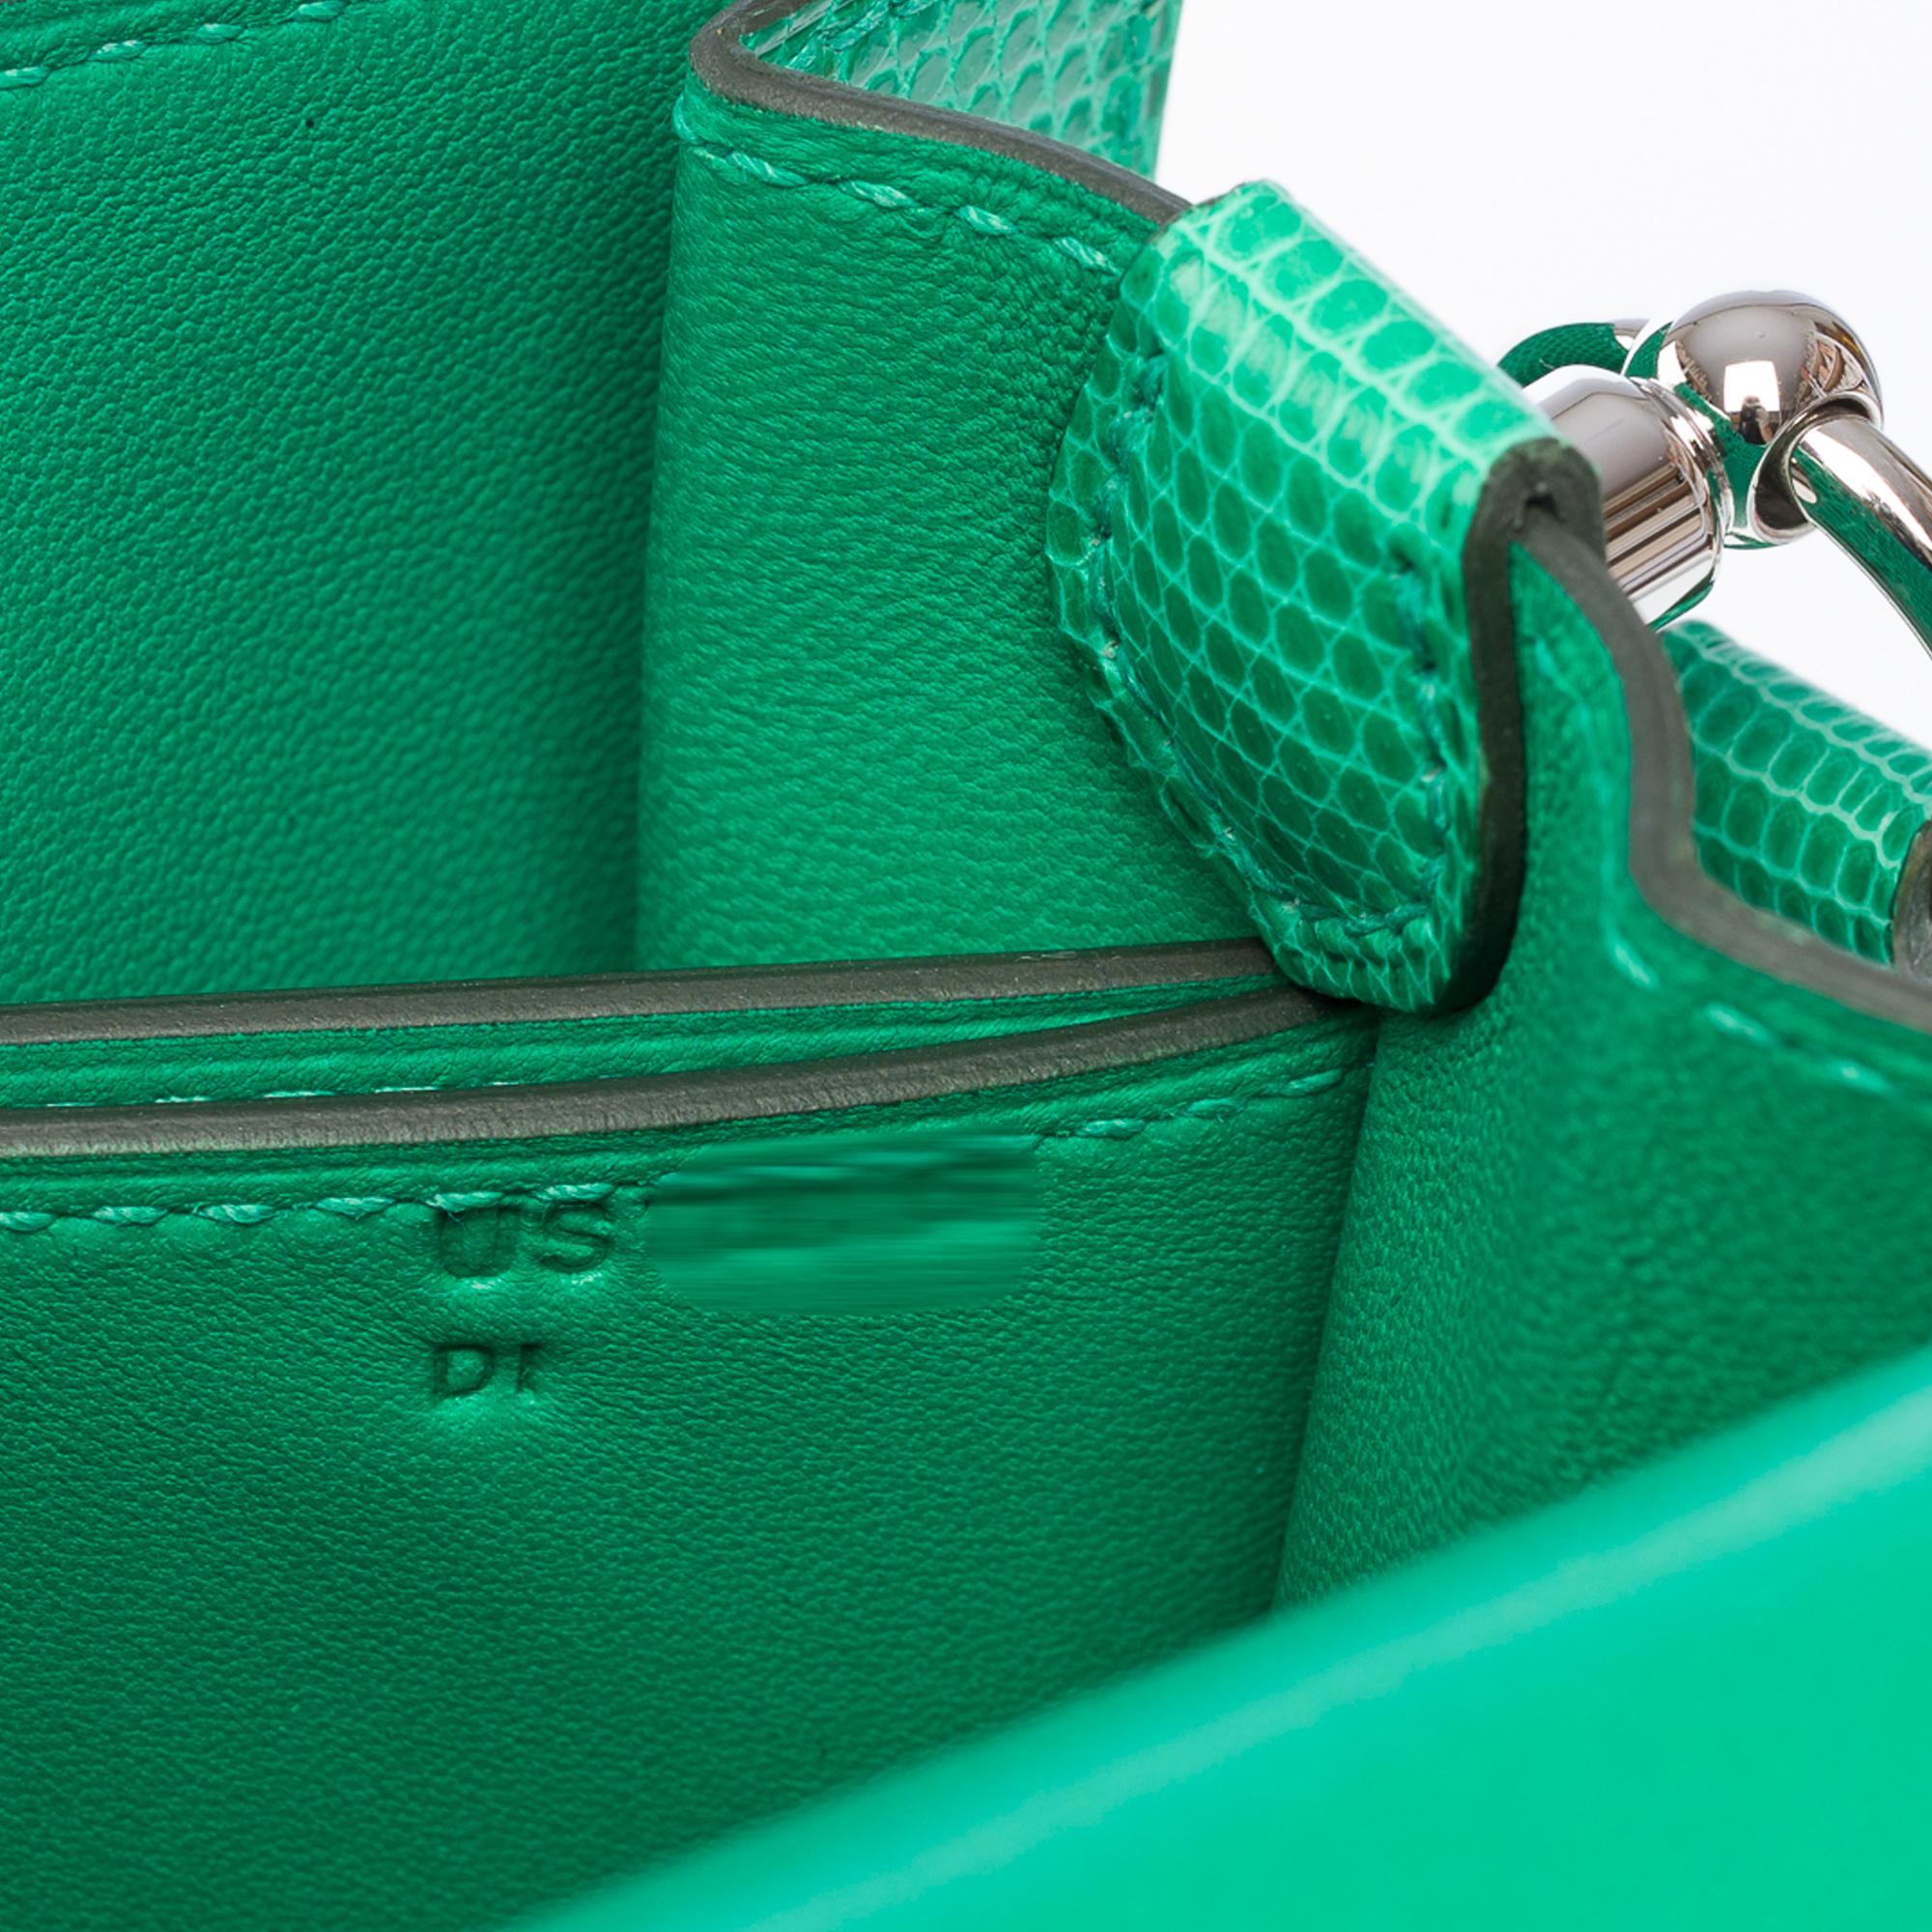 New Amazing Hermès Roulis 18 shoulder bag in mint green lizard, SHW For Sale 4